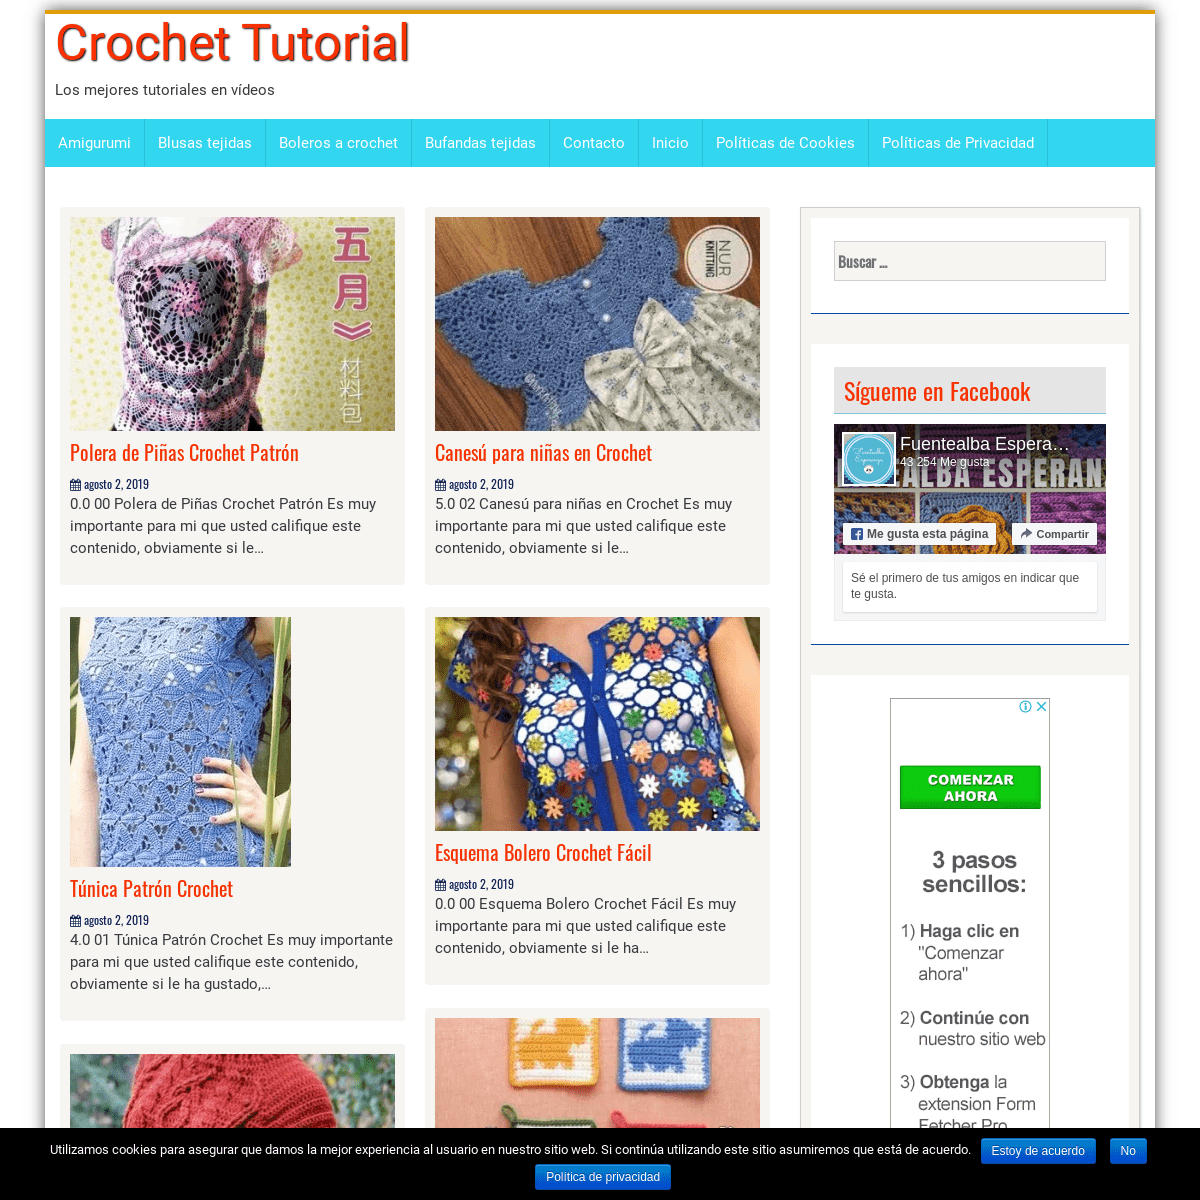 A complete backup of crochet-tutorial.com